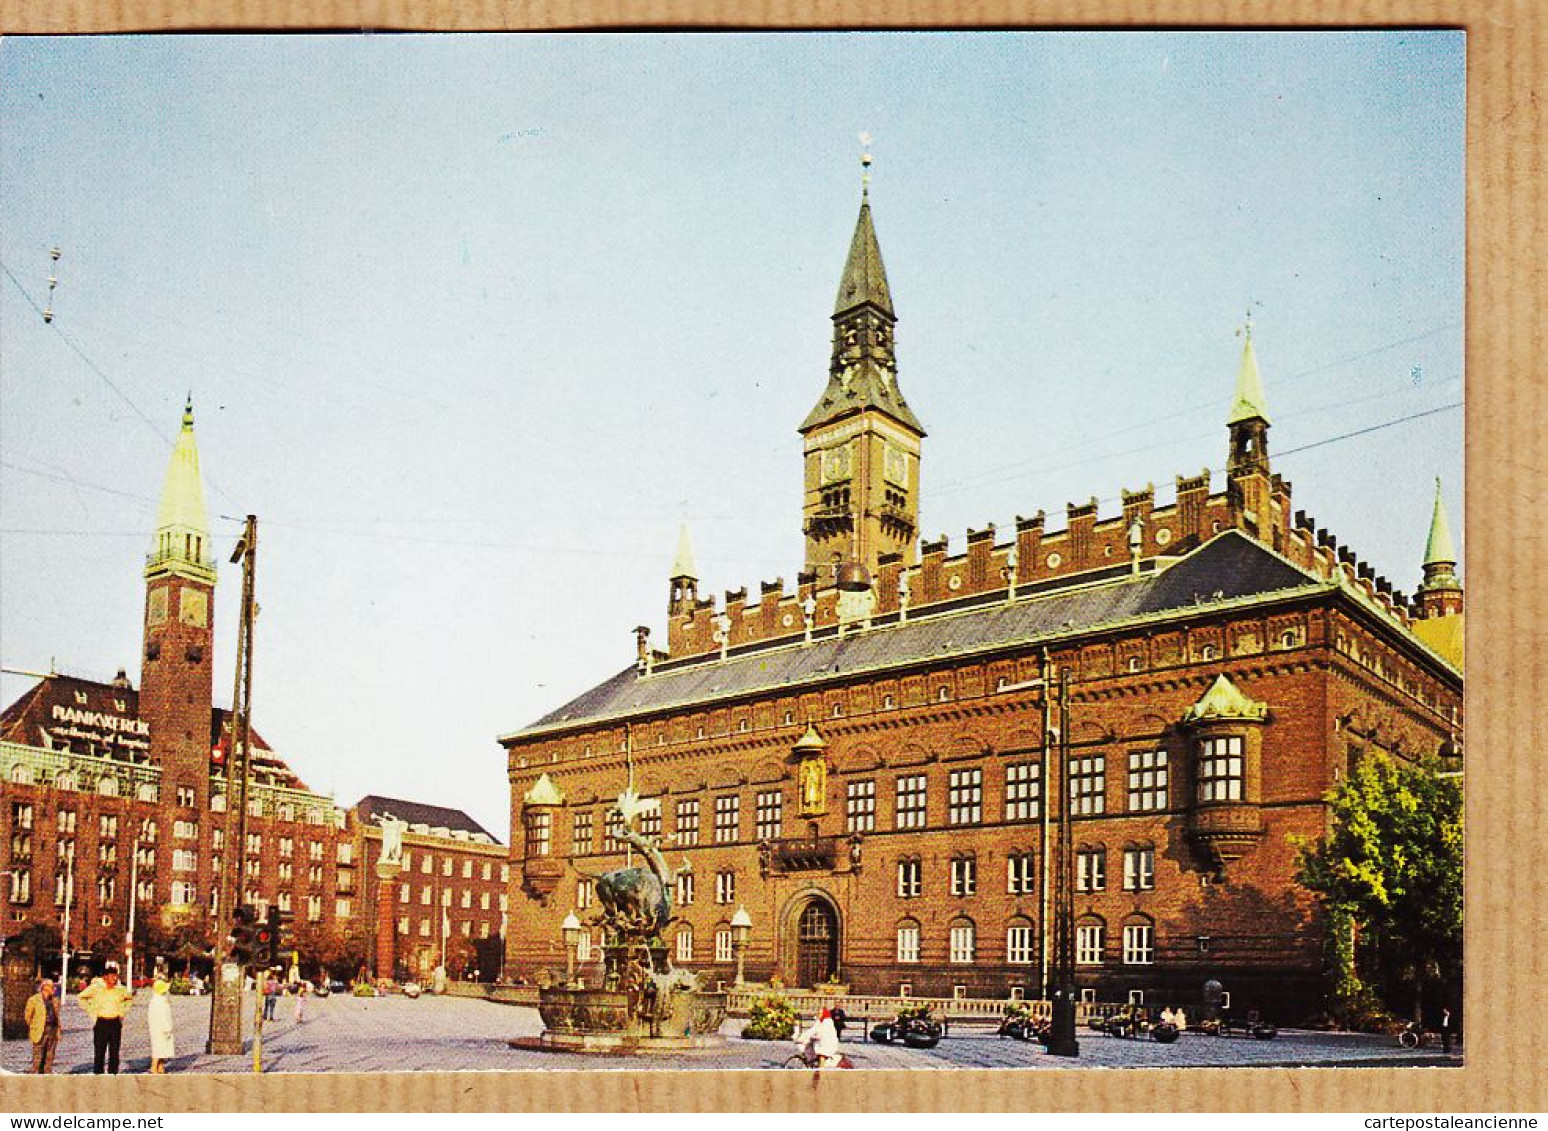 04669 / Danmark COPENHAGEN Kopenhagen Town Hall Square Rathausplatz Denmark COPENHAGUE 1970s - Danemark